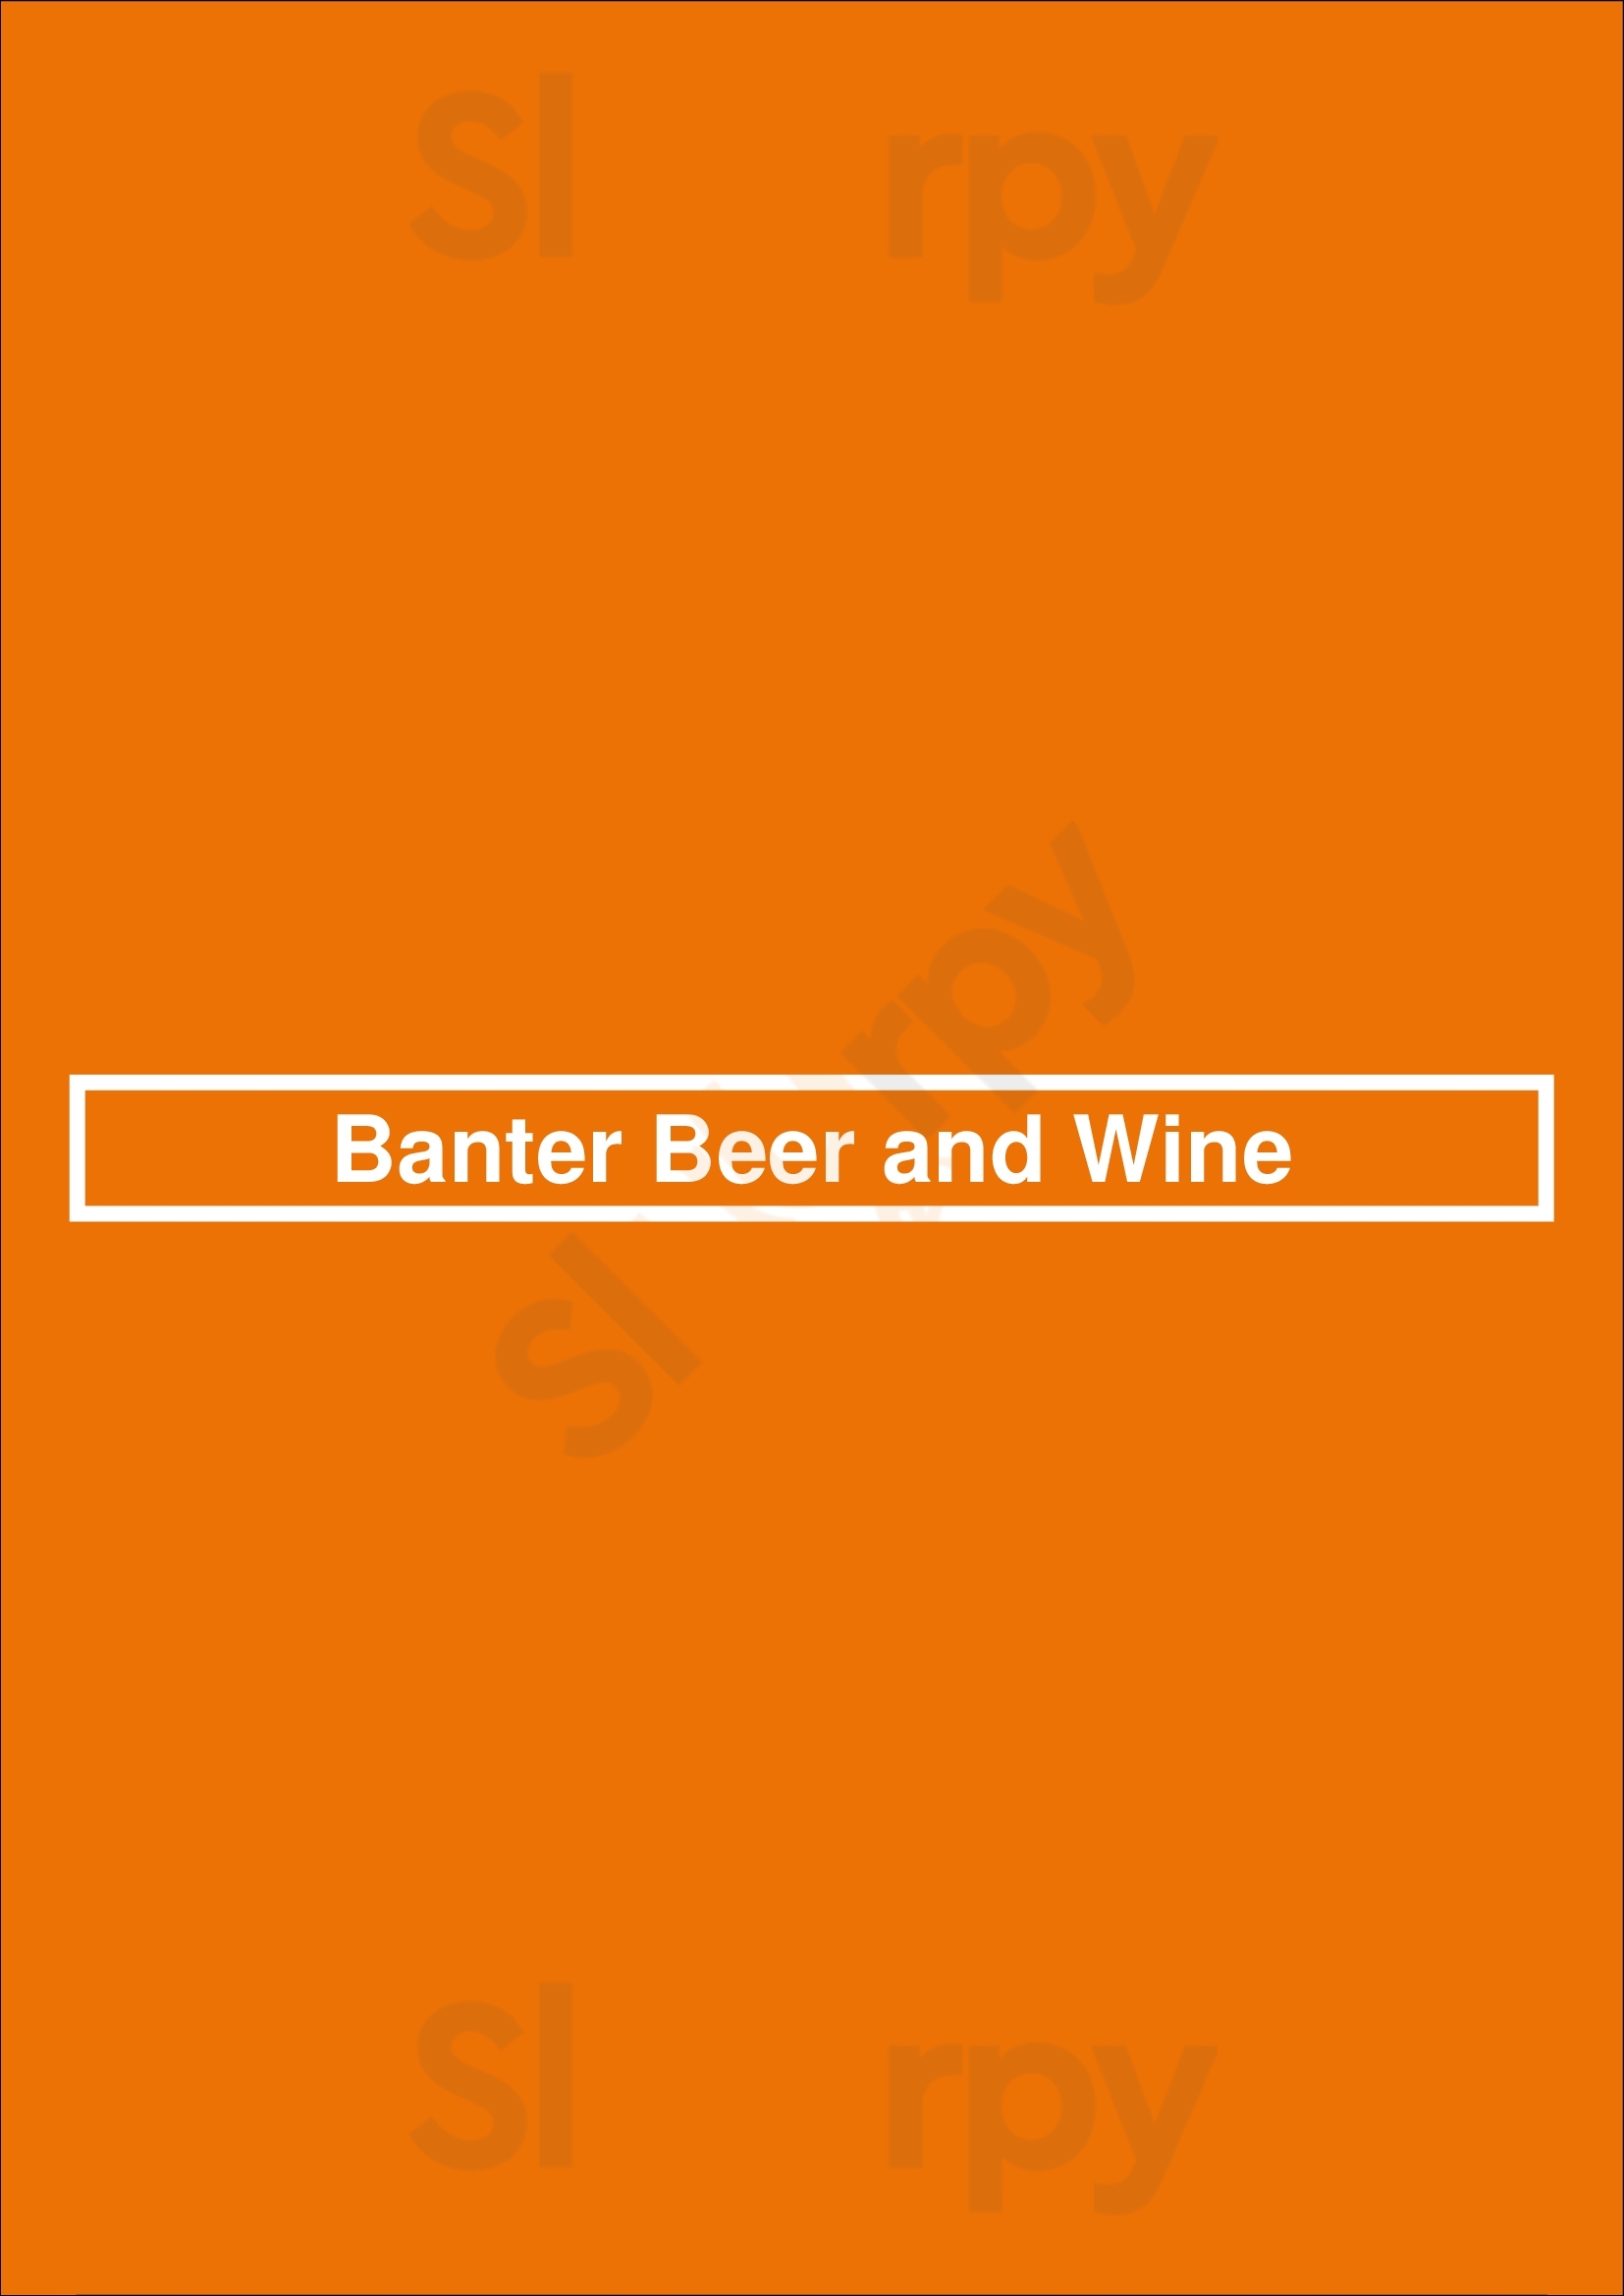 Banter Beer And Wine Cleveland Menu - 1